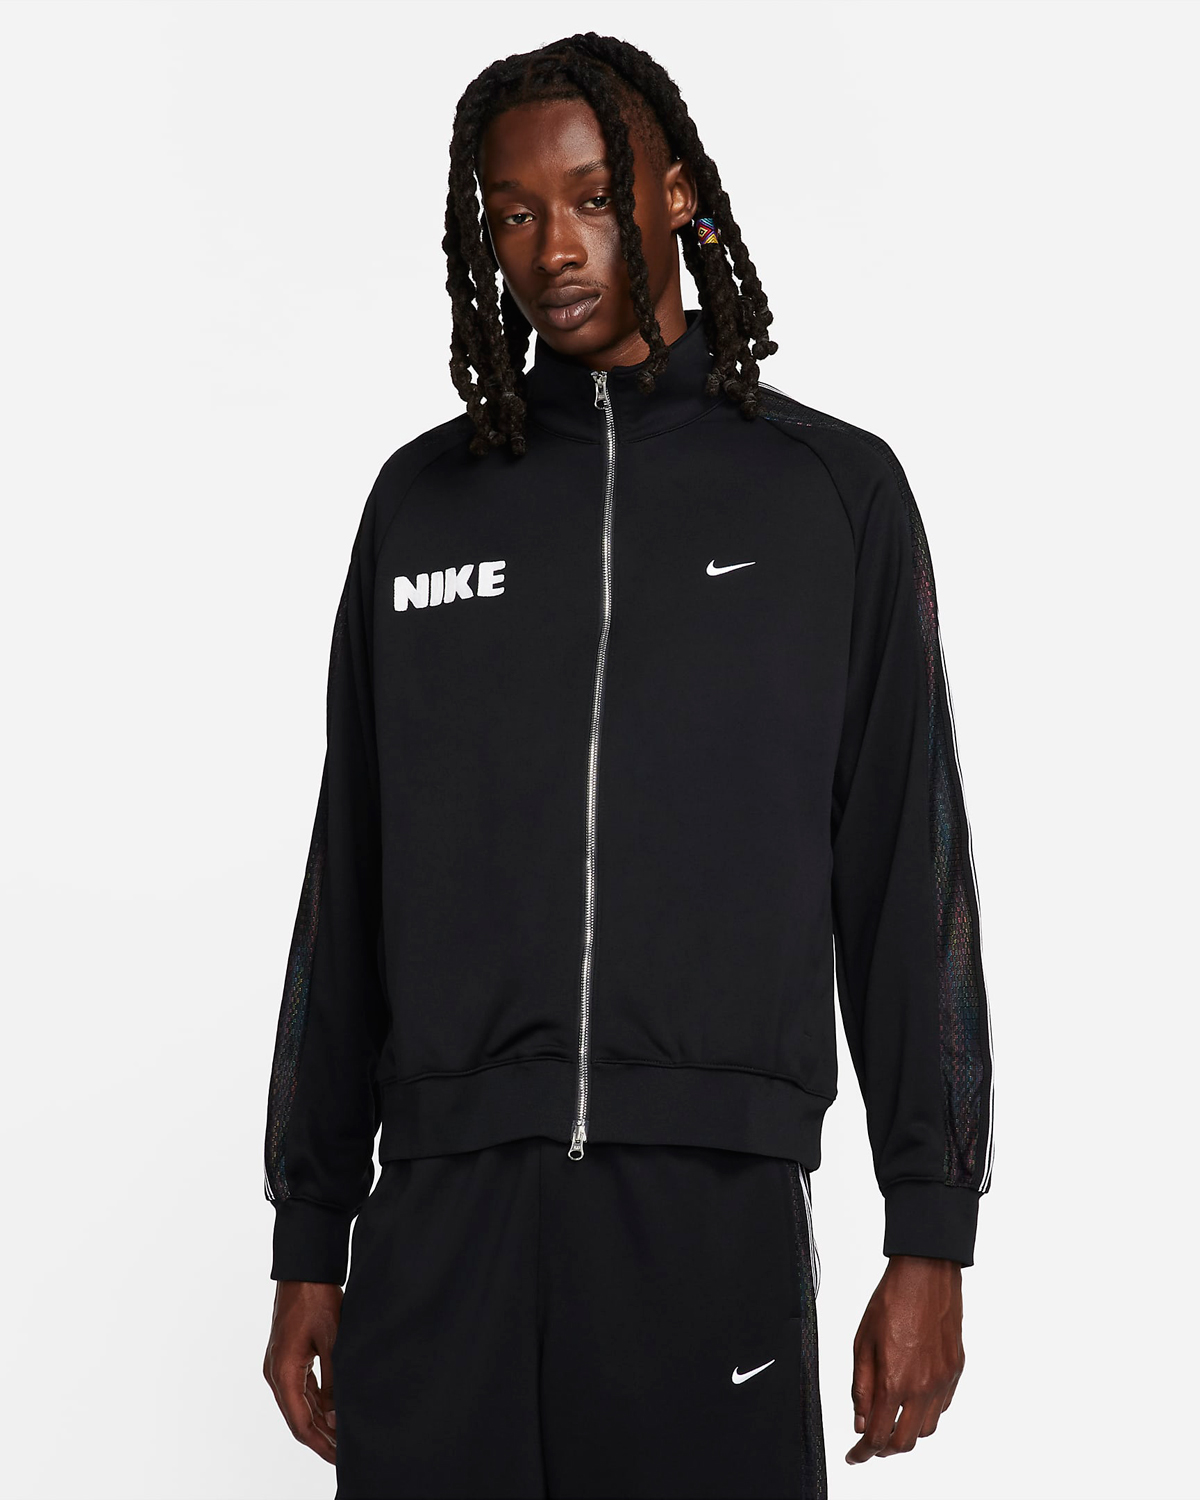 Nike-Lightweight-Zip-Basketball-Jacket-Black-White-1